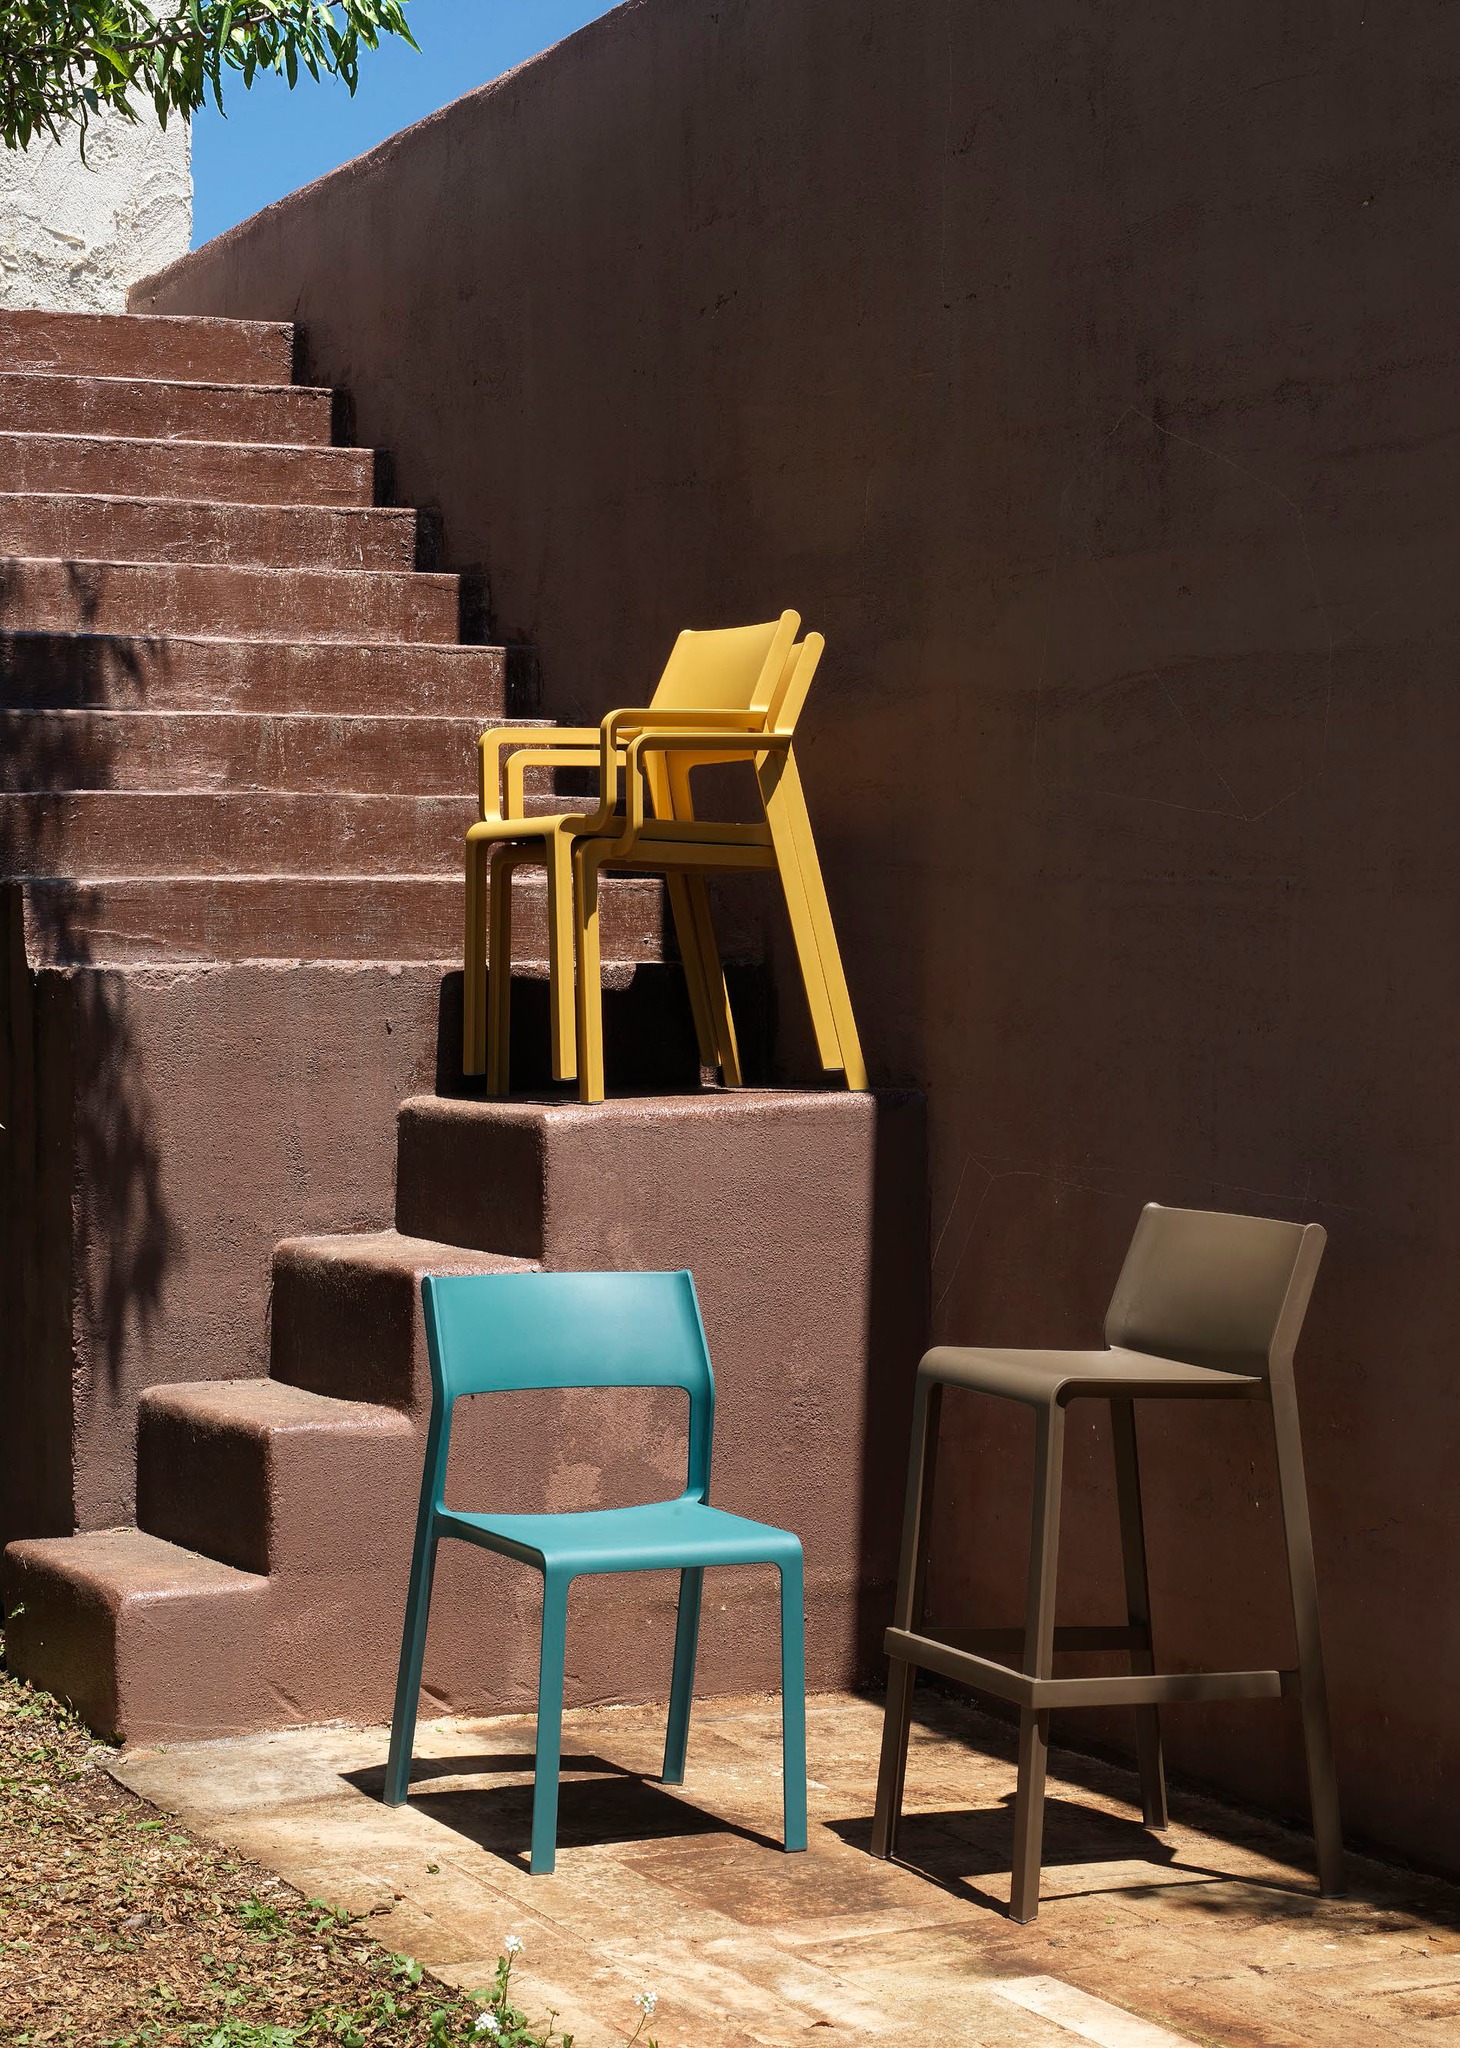 Favells » Outdoor Furniture Fuengirola, Costa Del Sol, Spain